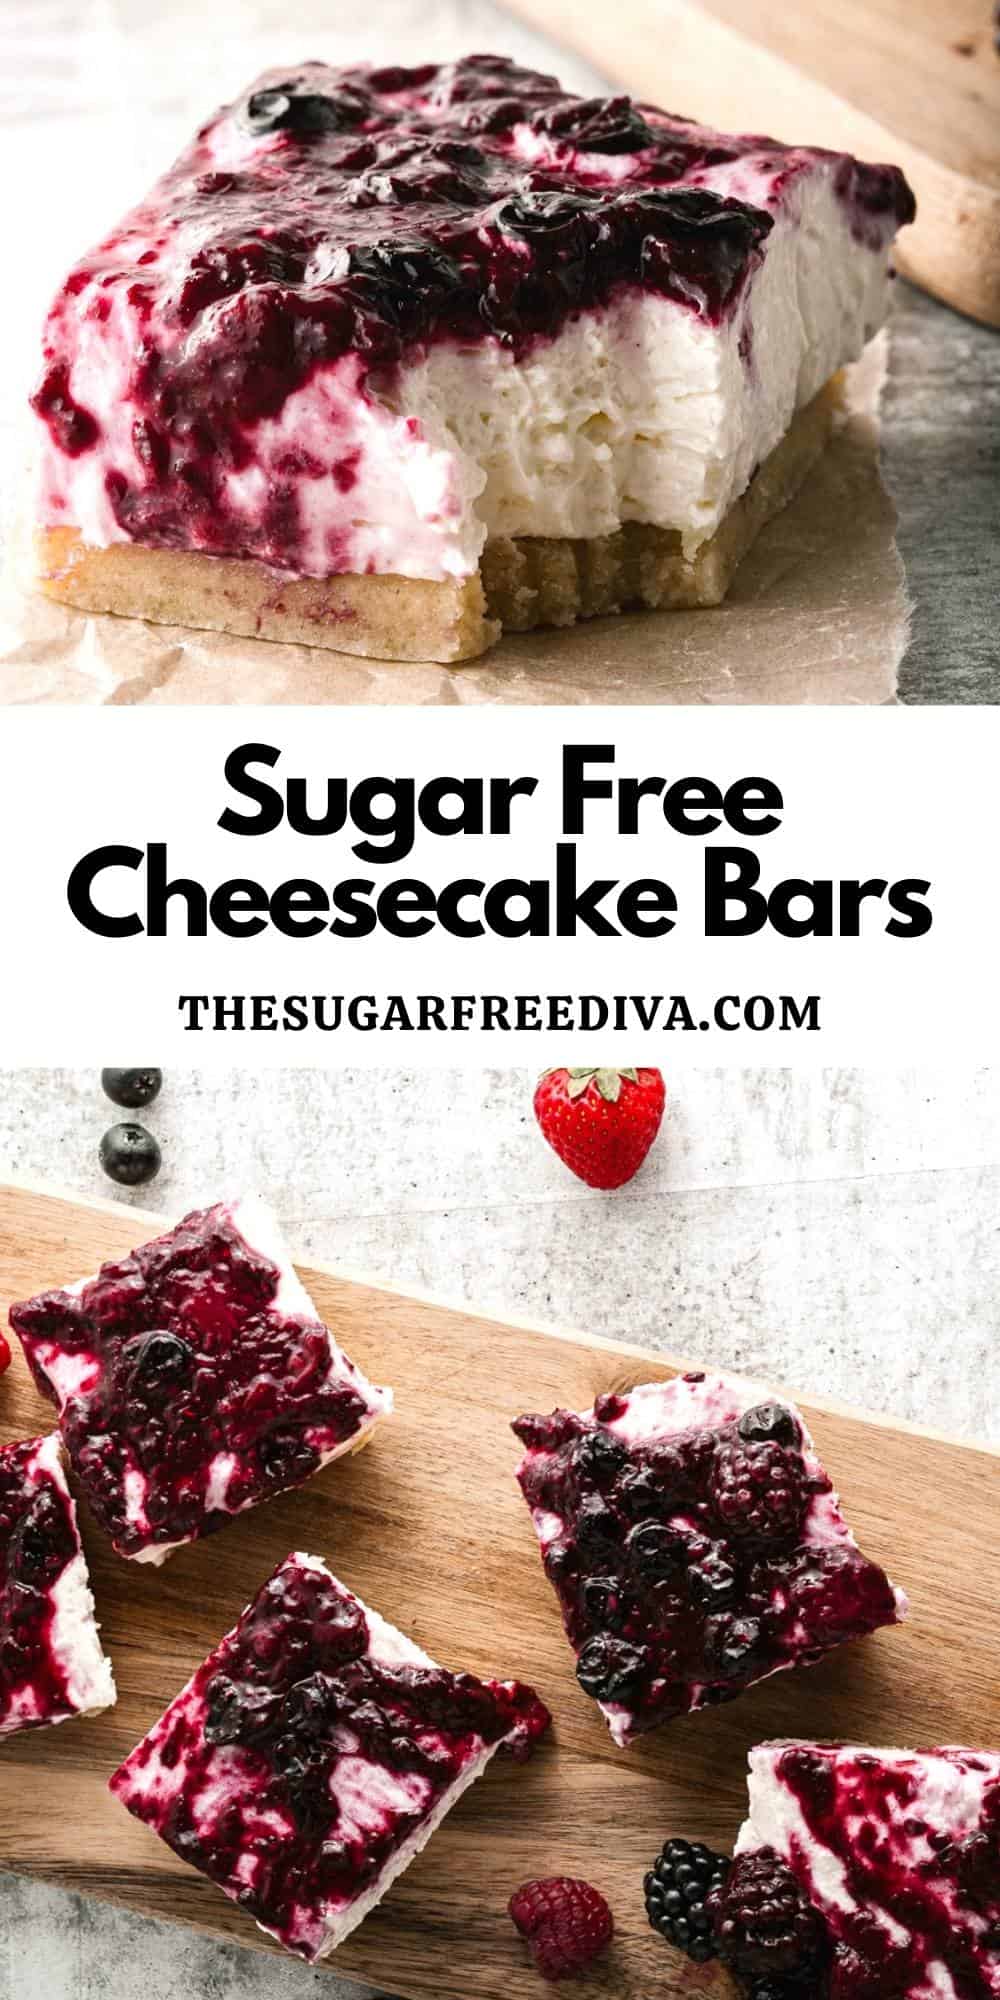 Sugar Free Cheesecake Bars